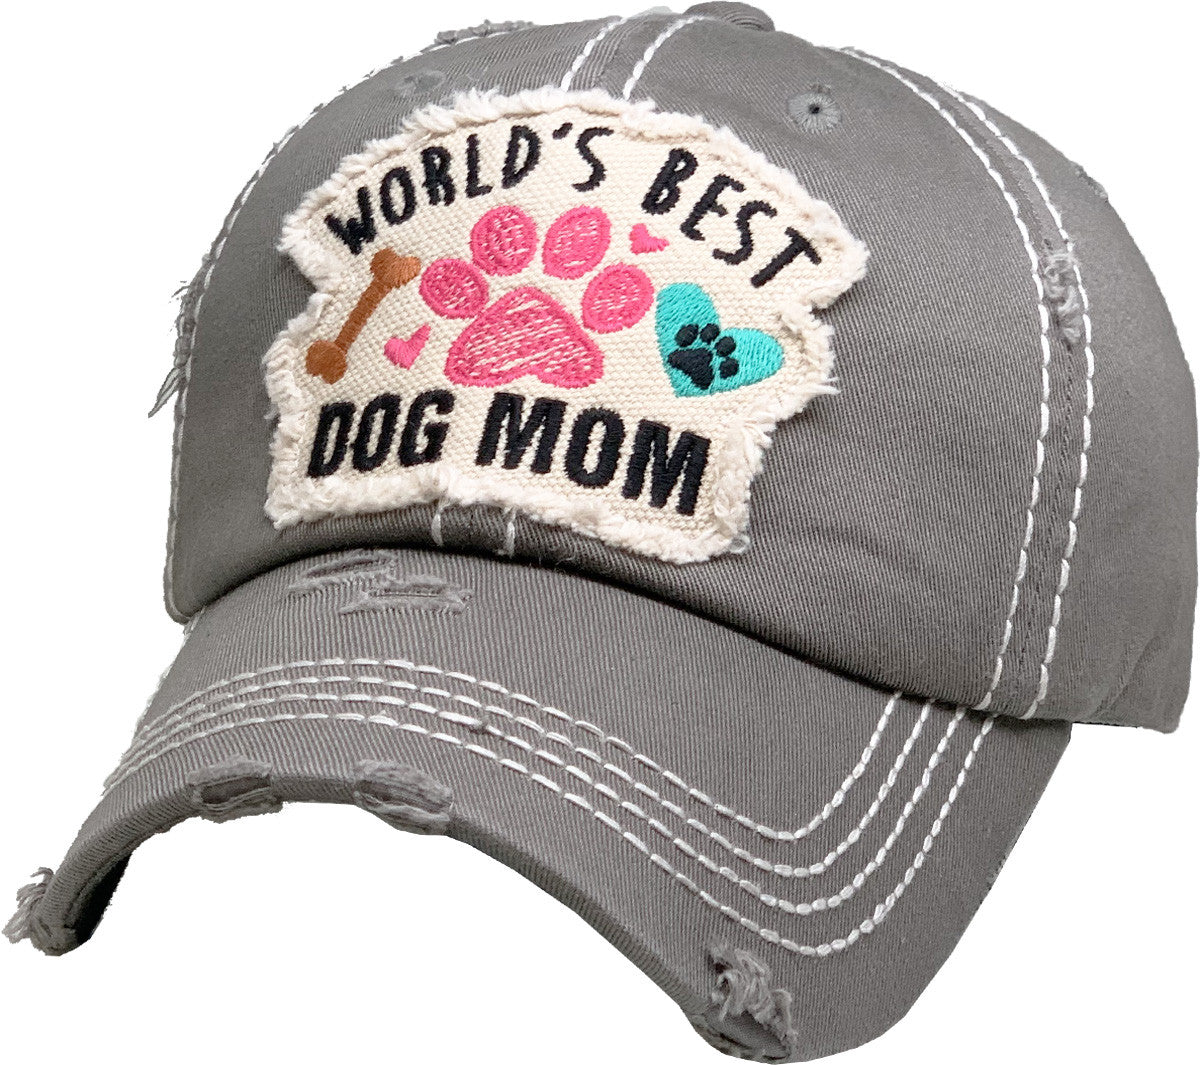 World's Best Dog Mom Cap